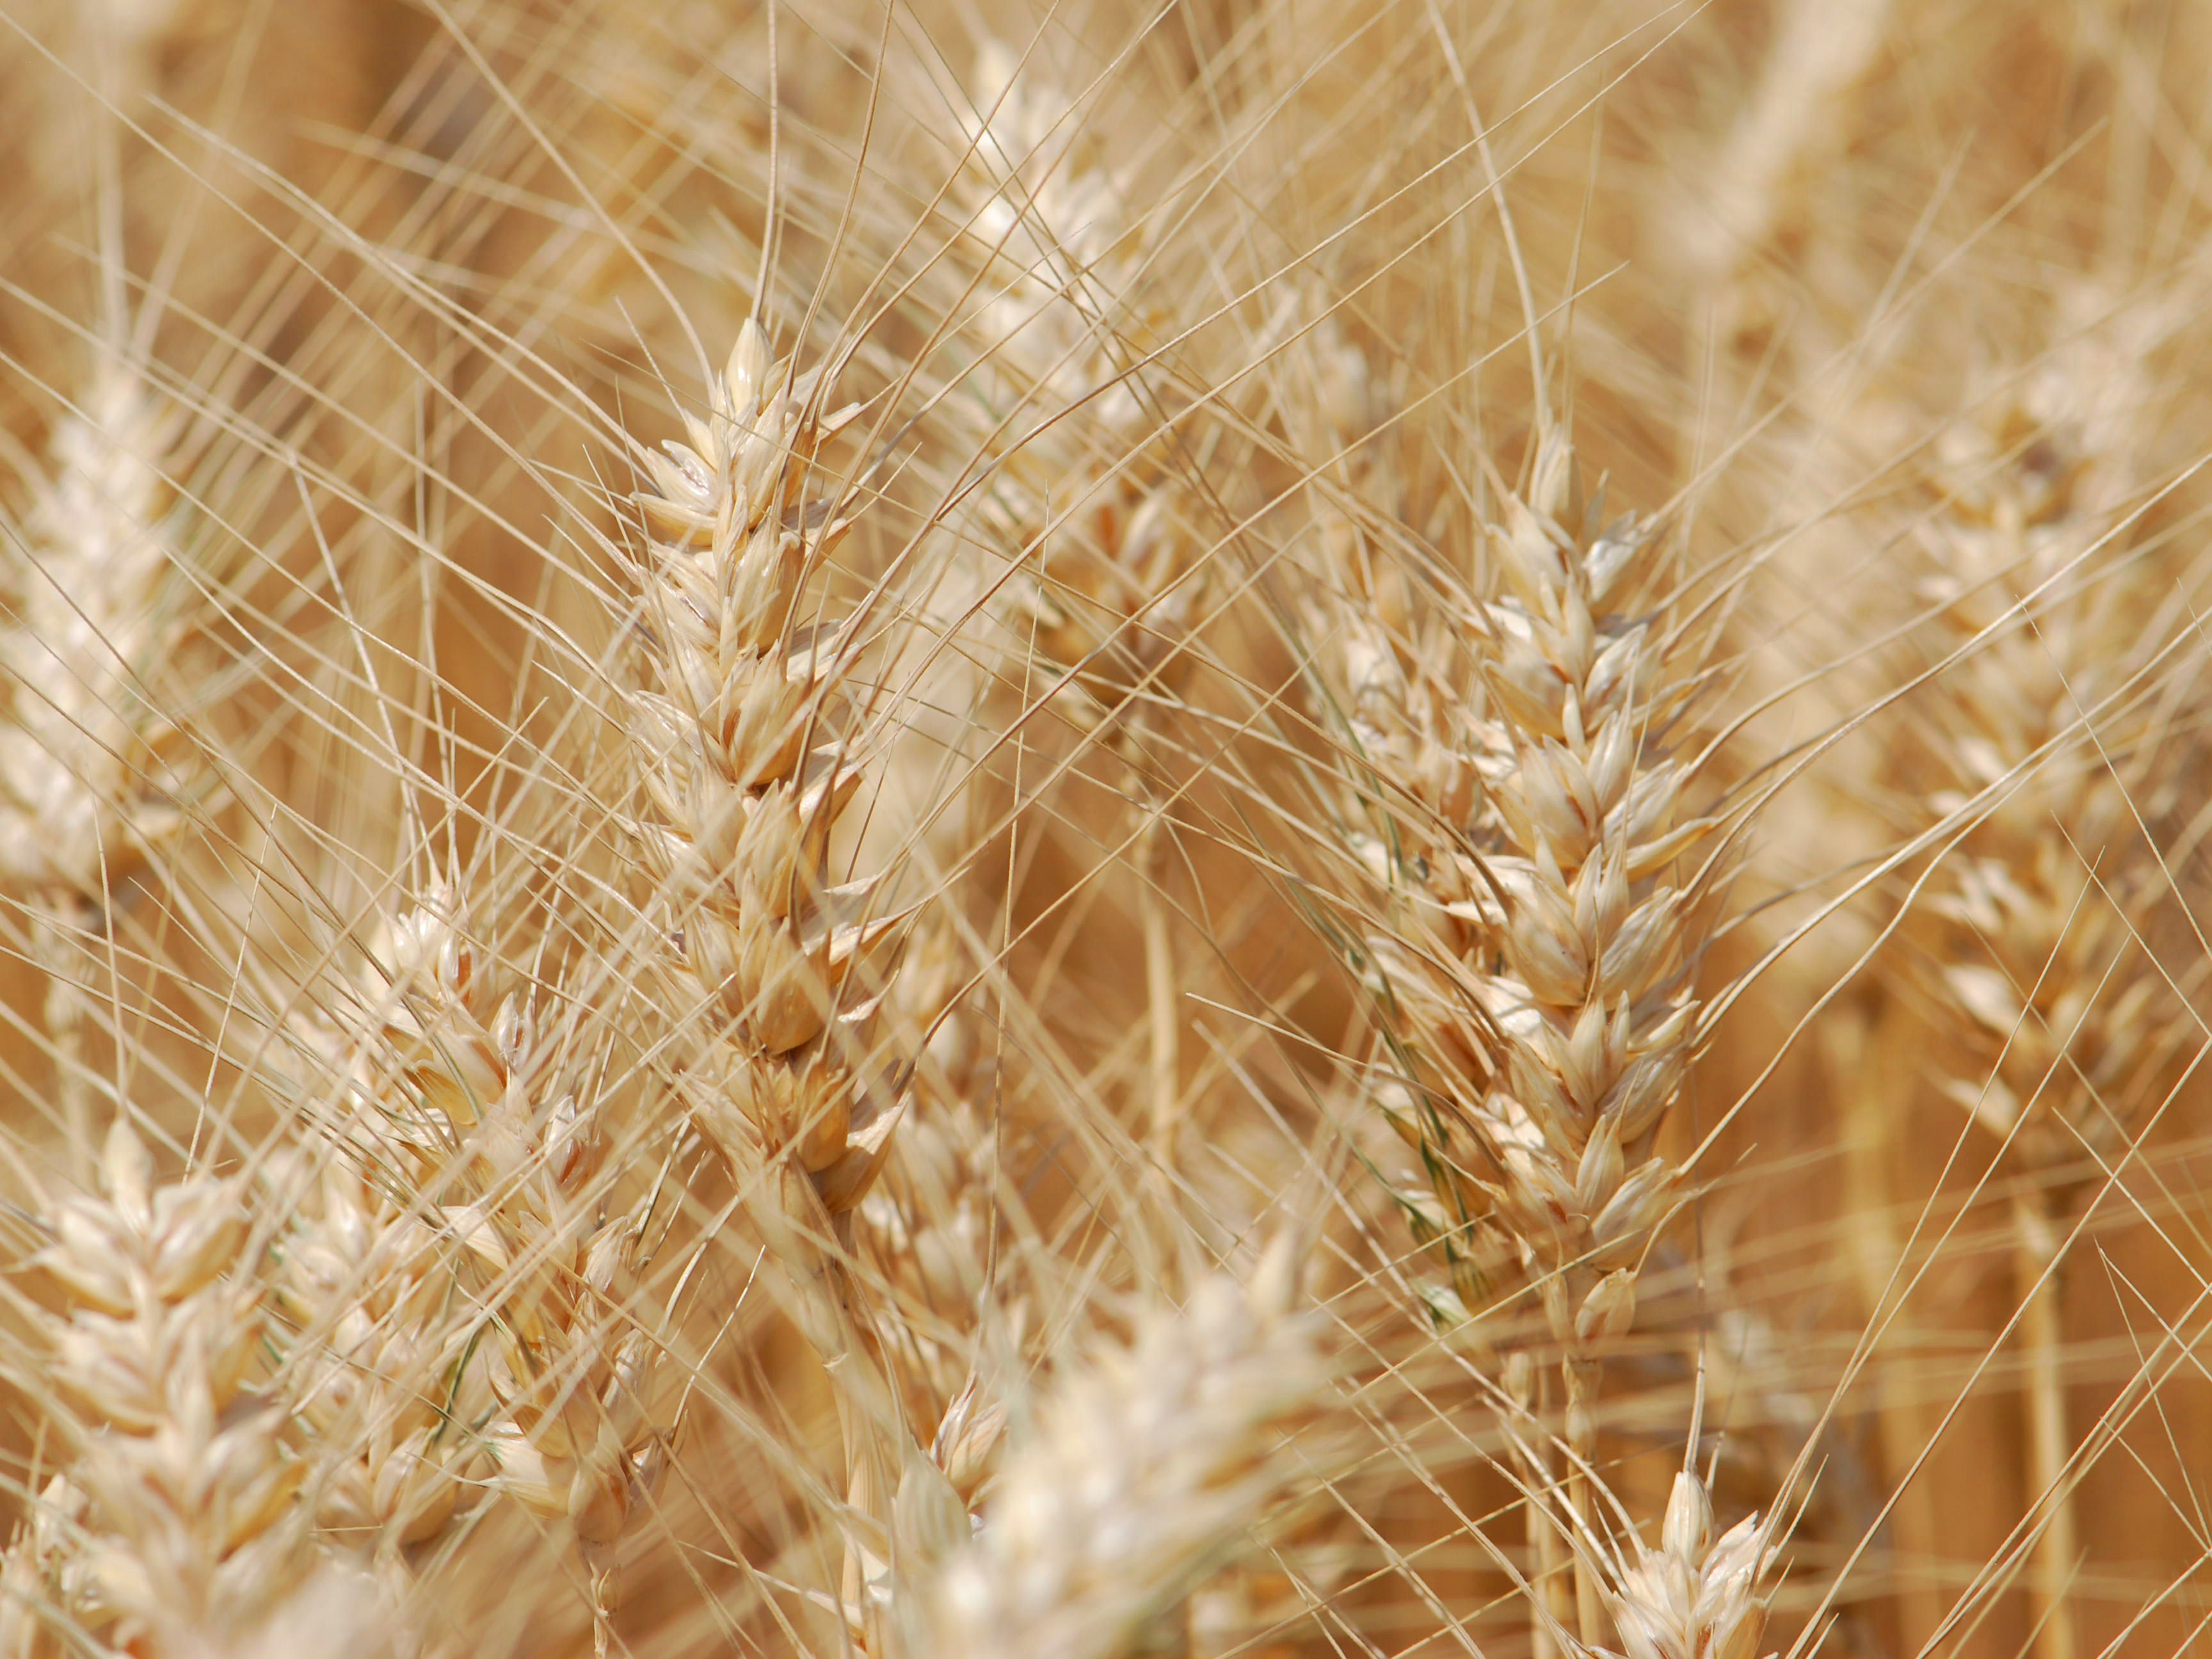 Wheat: Rabi harvesting season